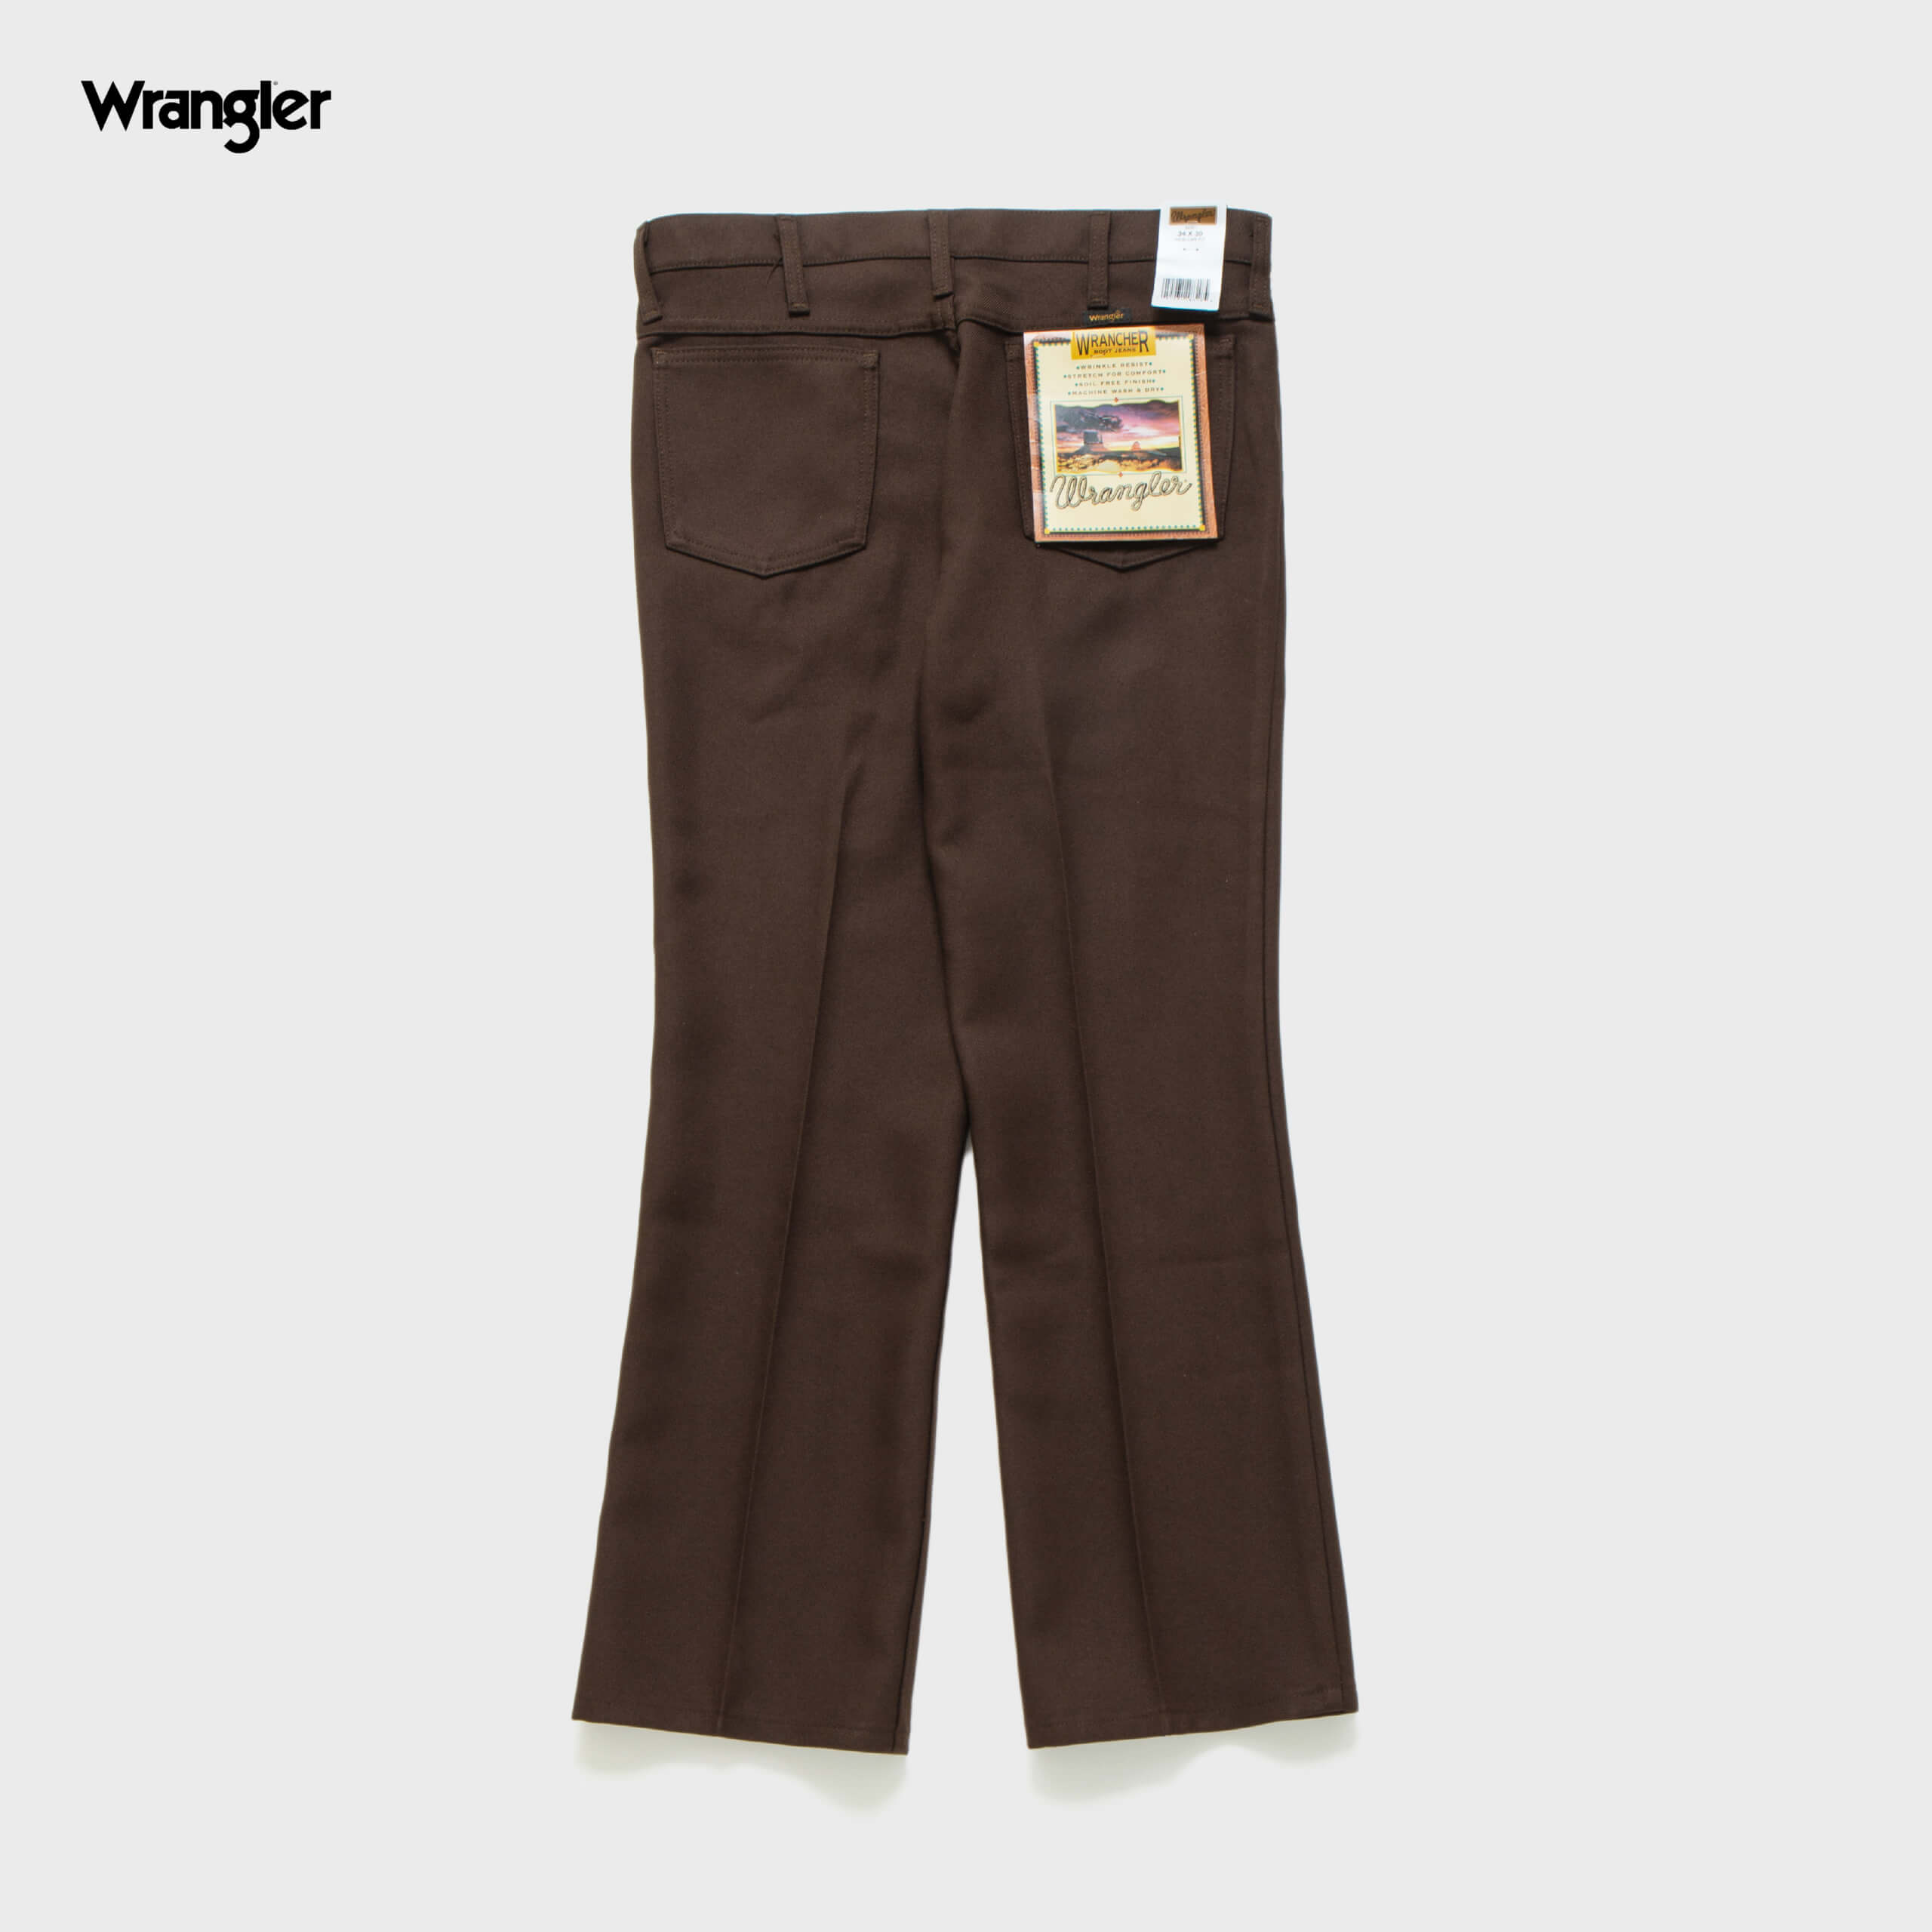 wrangler-wrancher-dress-jeans-brown_p1